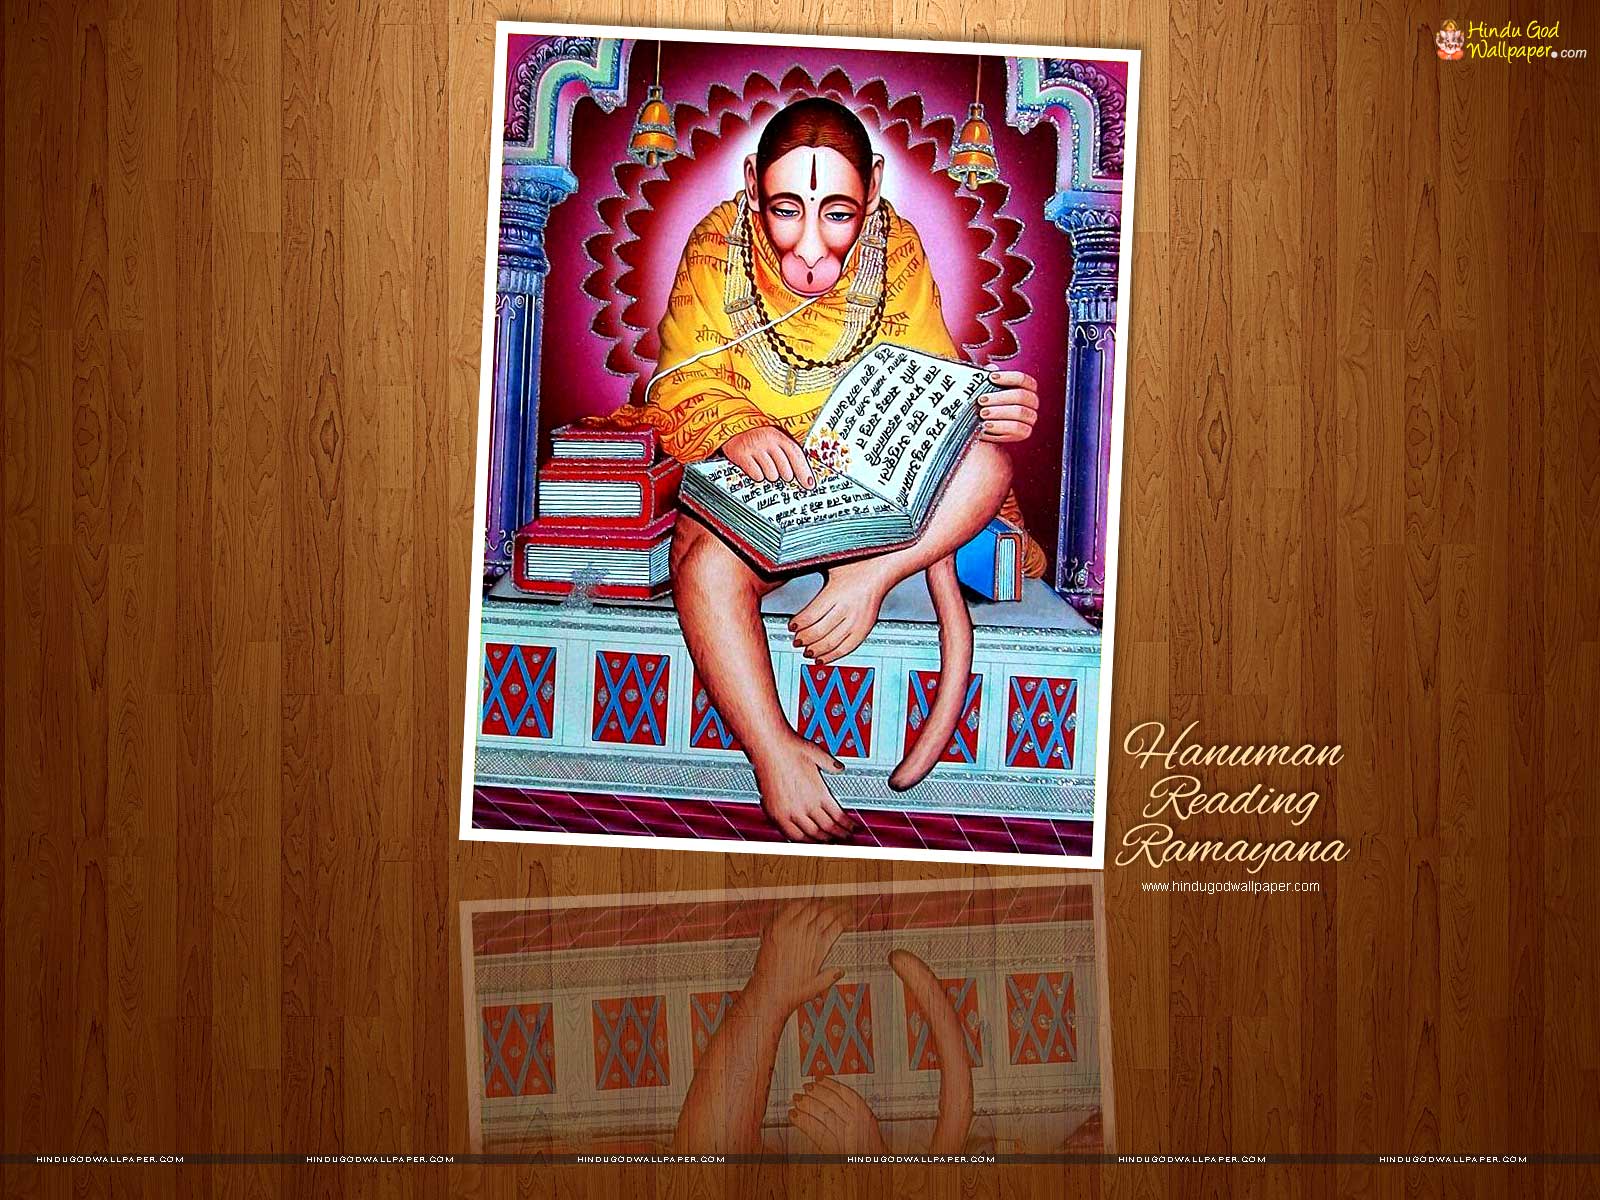 Hanuman Reading Ramayana